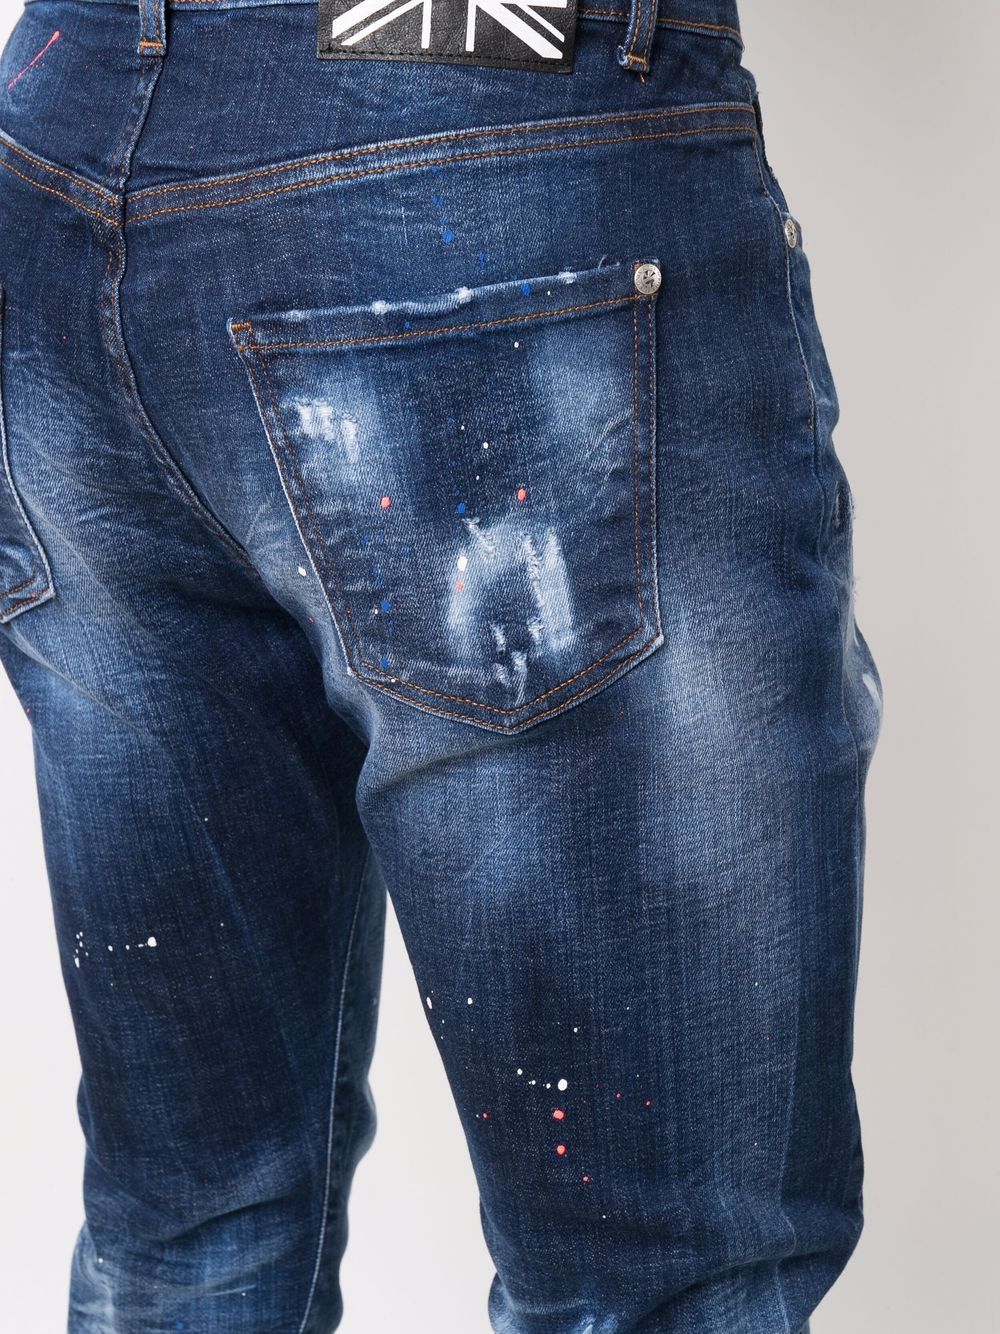 Indigo blue cotton faded-effect denim jeans